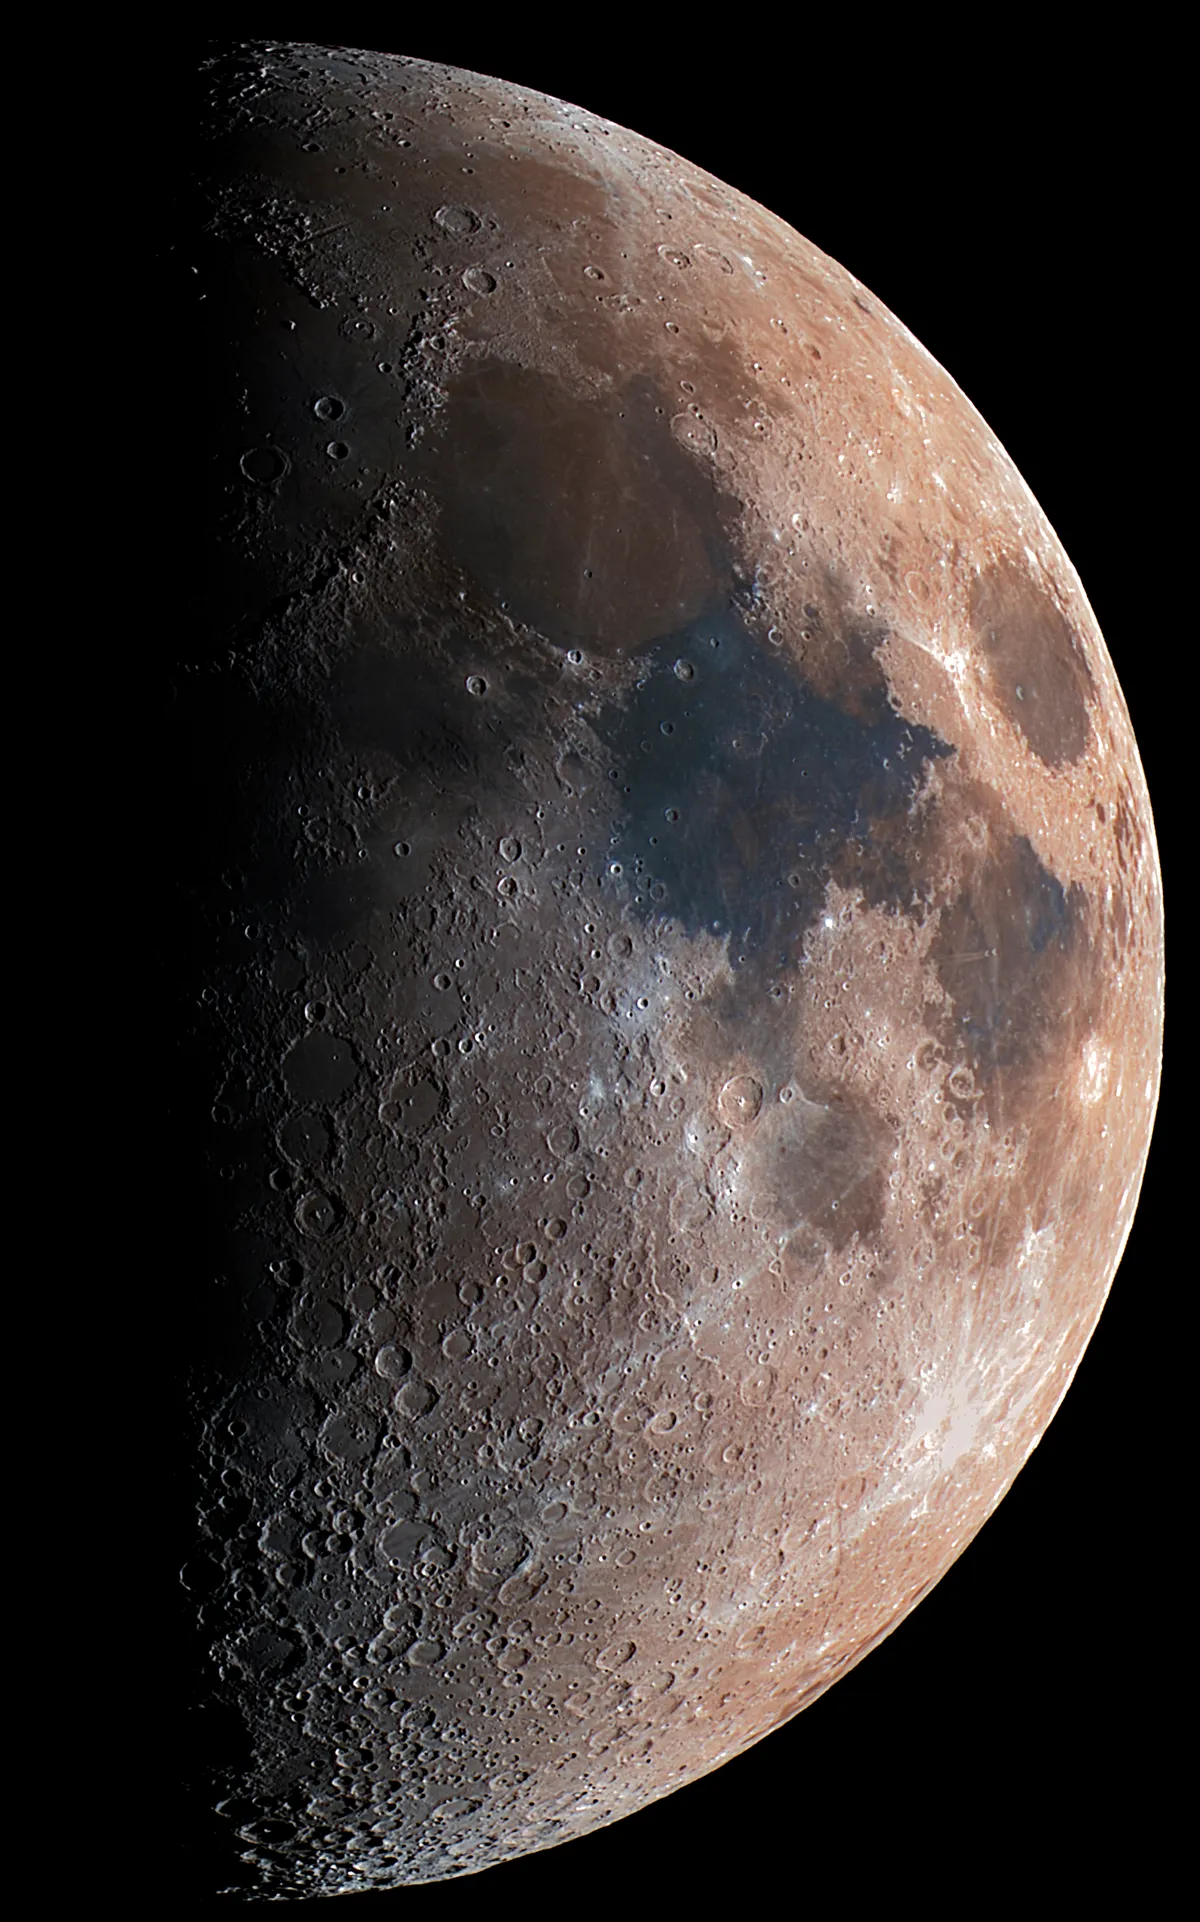 Mineral Moon Fernando Oliveira de Menezes, São Paulo, Brazil, 21 March 2021. Equipment: ZWO ASI 6200MC Pro colour camera, Sky-Watcher Esprit 150ED apo triplet, iOptron CEM60-EC mount